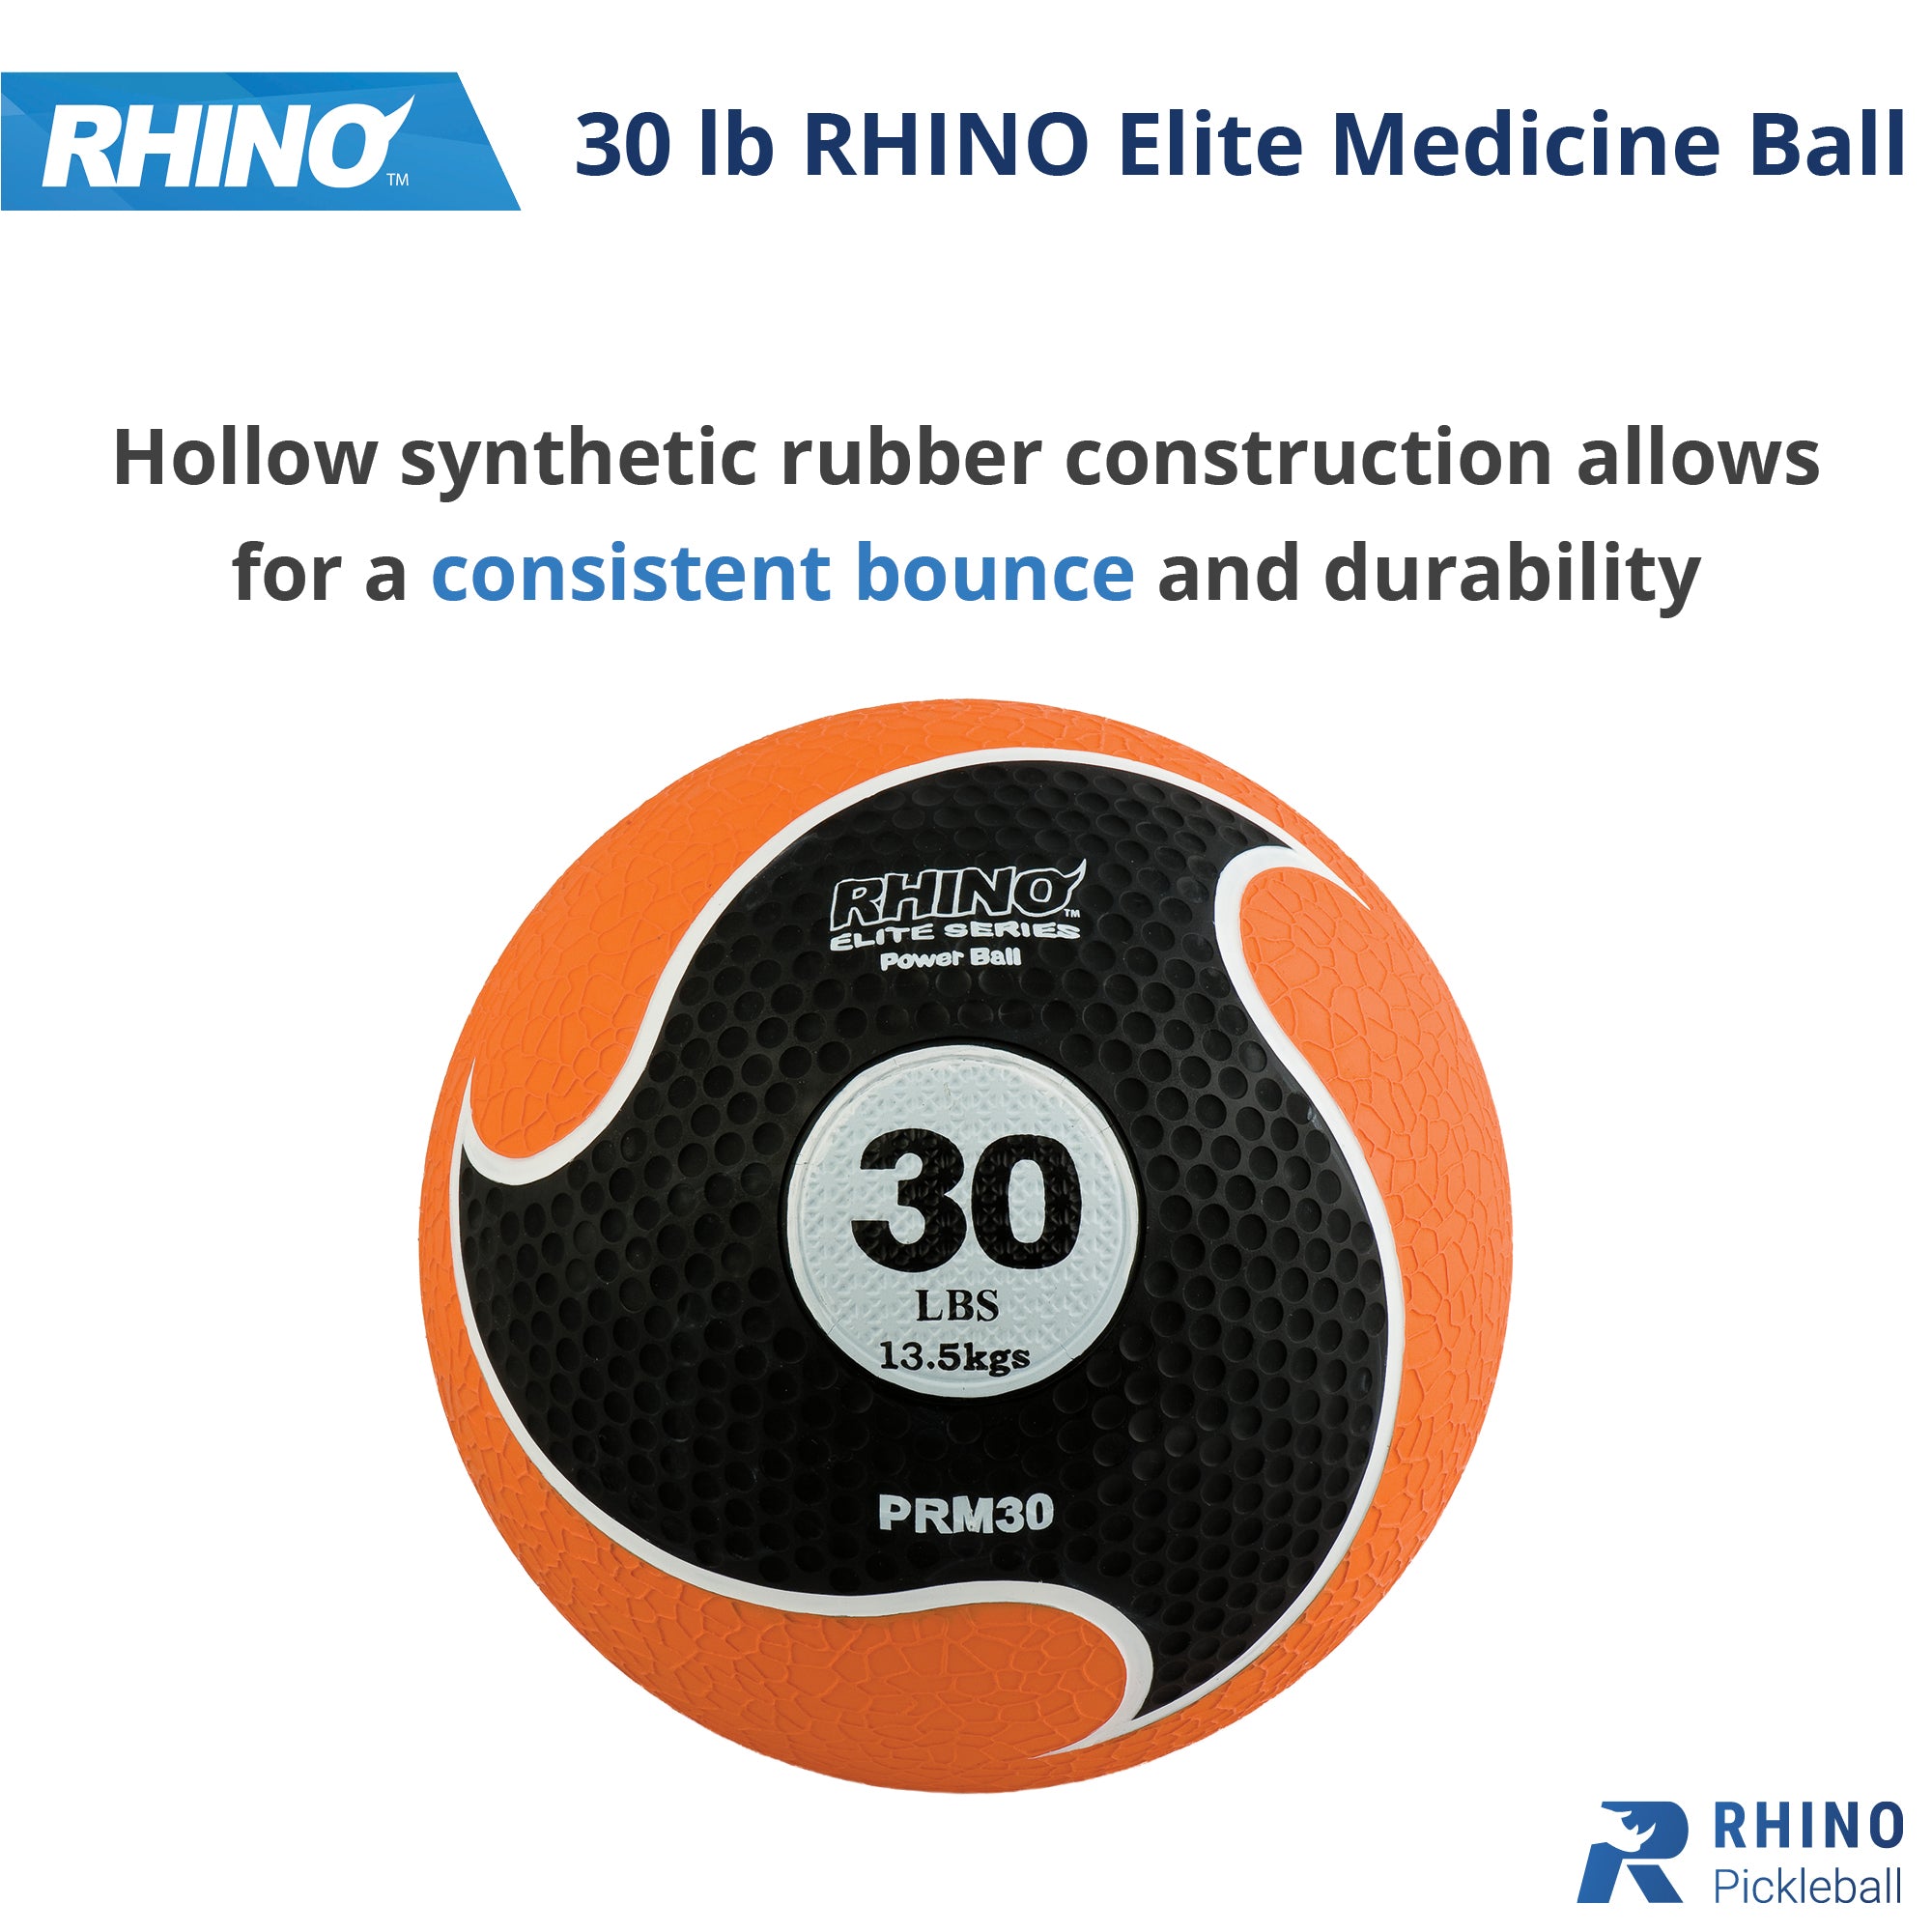 Rhino Elite Medicine Ball Series 25 lb RHINO __label:NEW! Agility fitness medicine ball physical therapy resistance Training